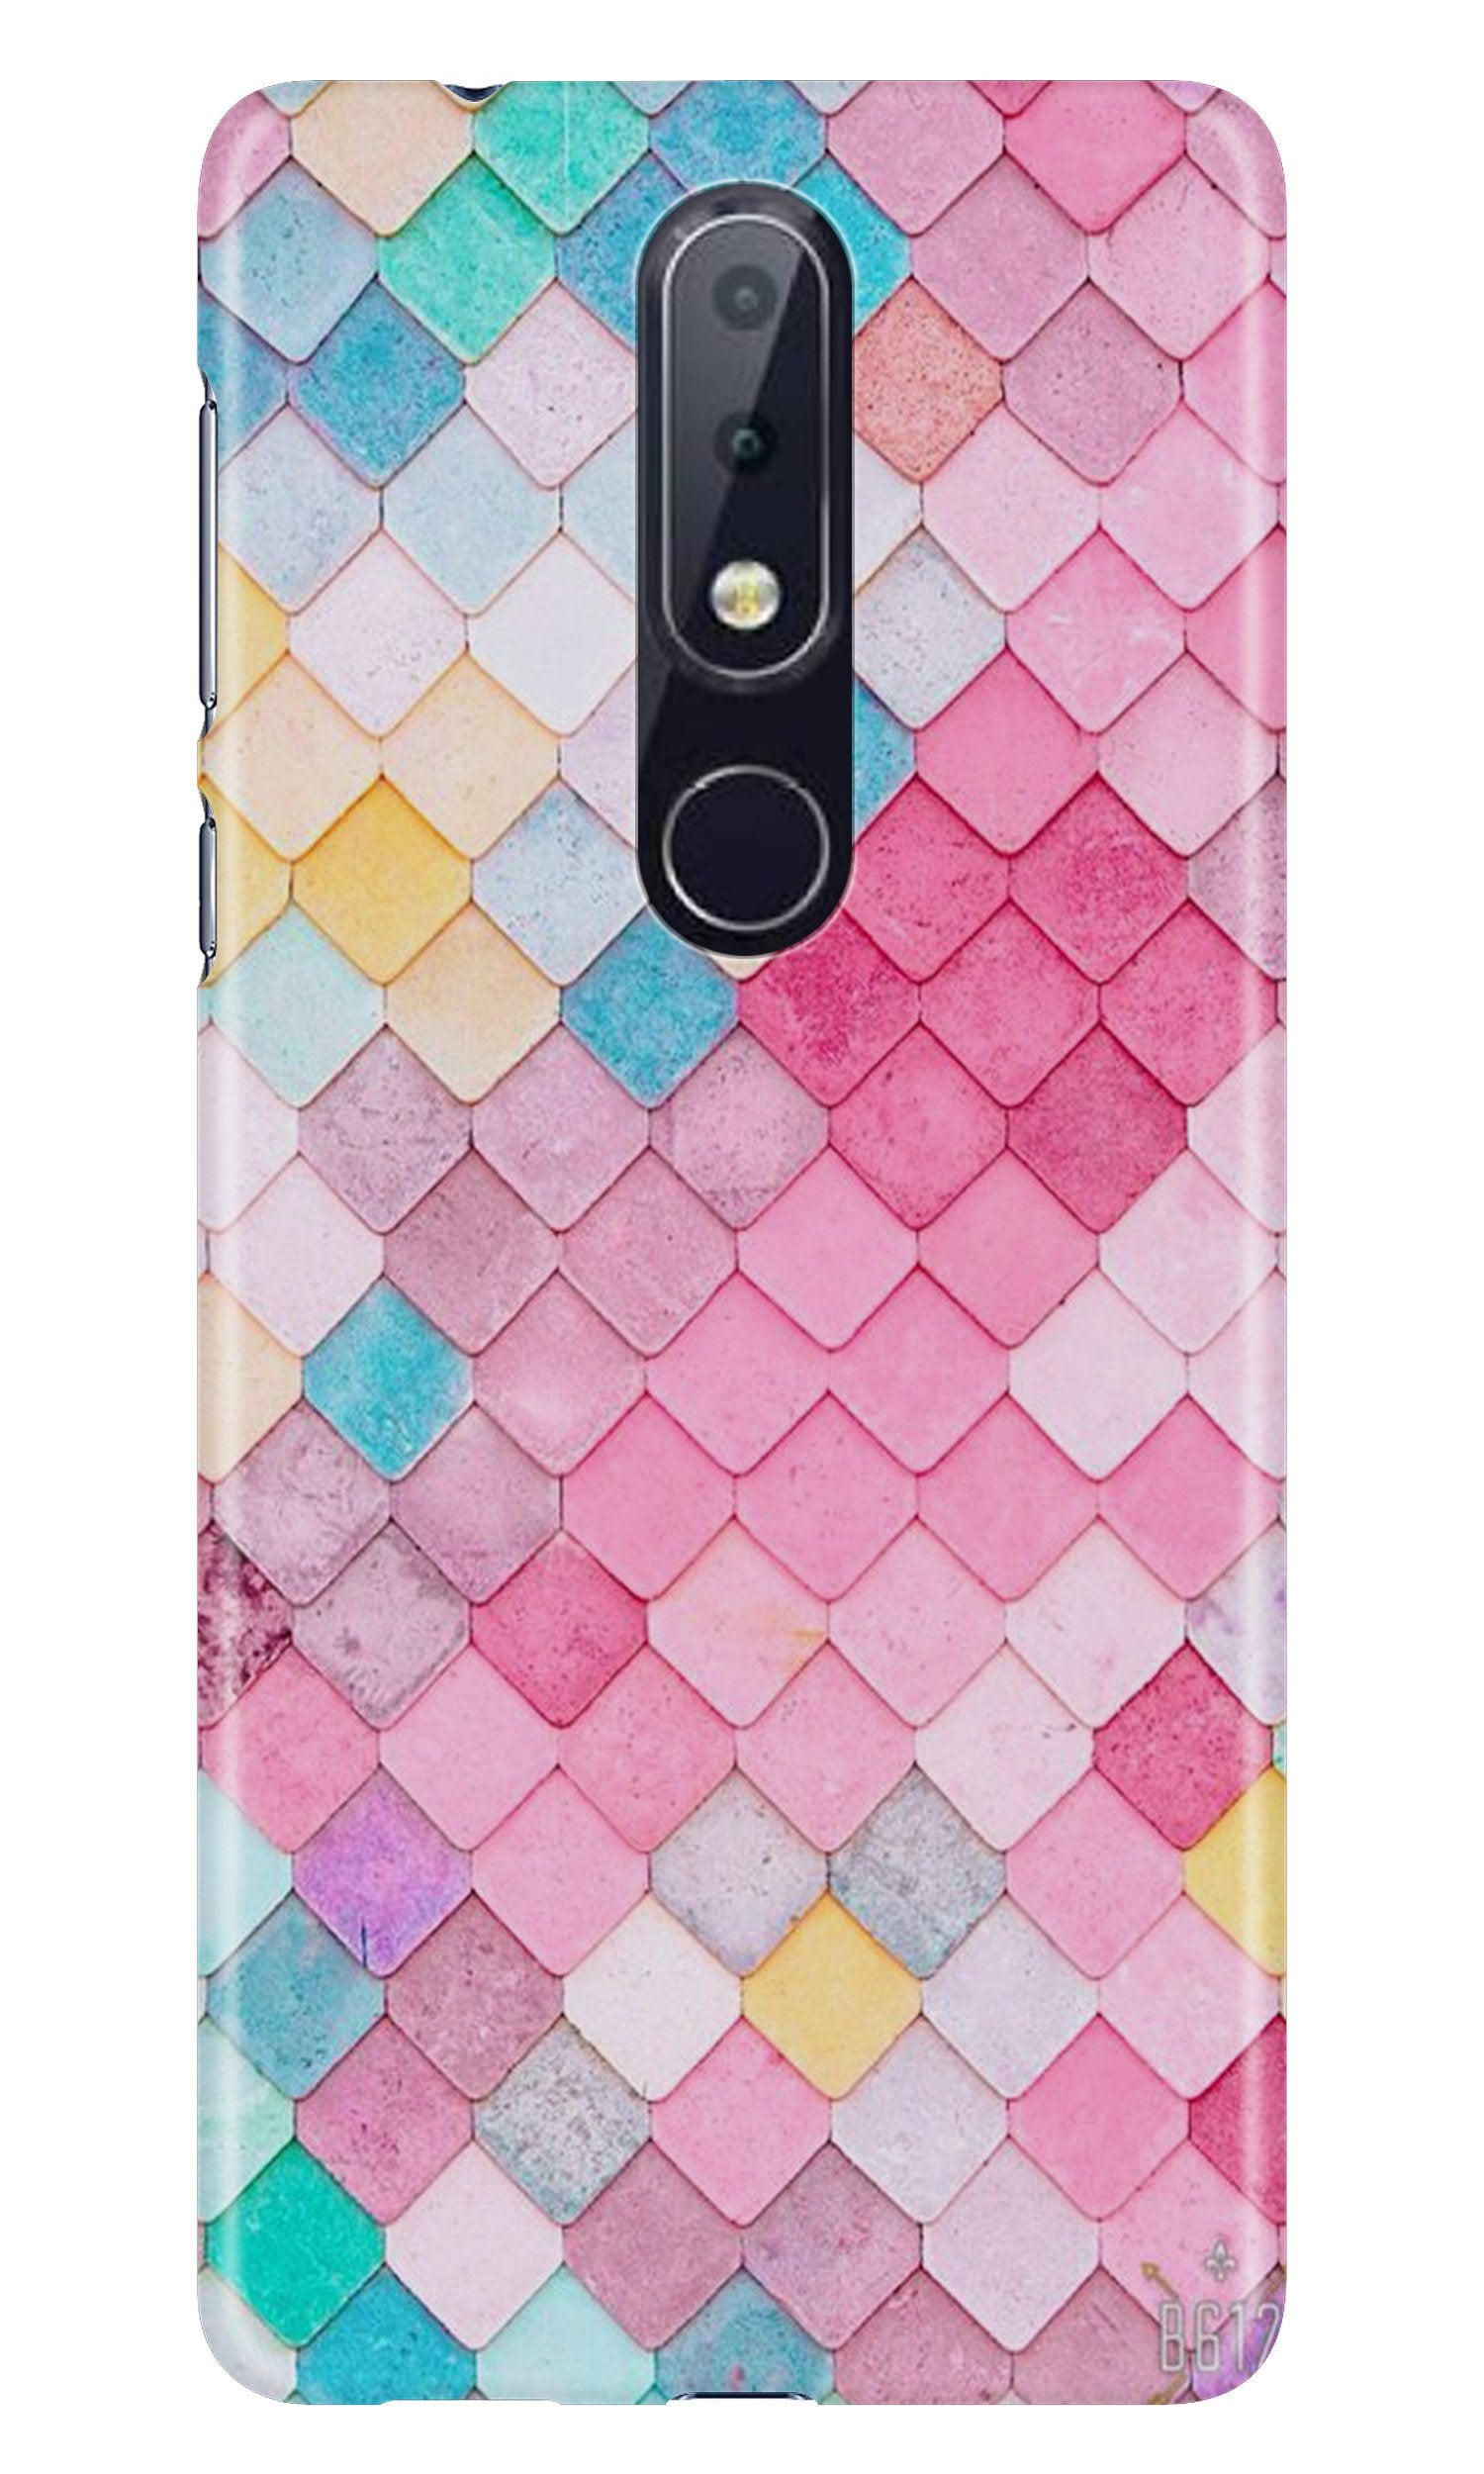 Pink Pattern Case for Nokia 7.1 (Design No. 215)